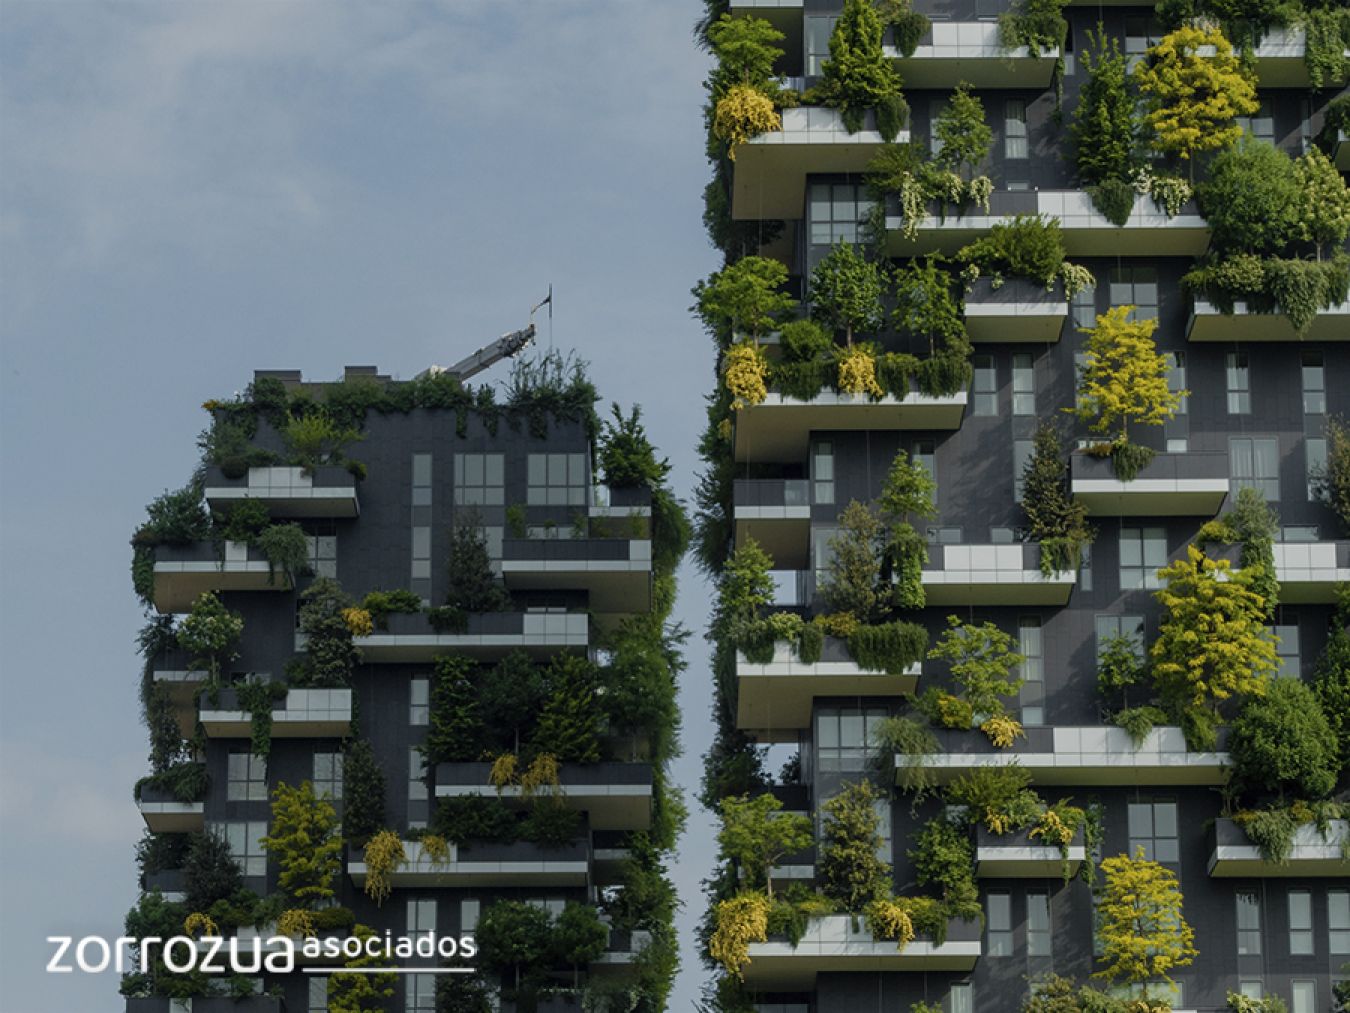 Desarrollo sostenible arquitectura